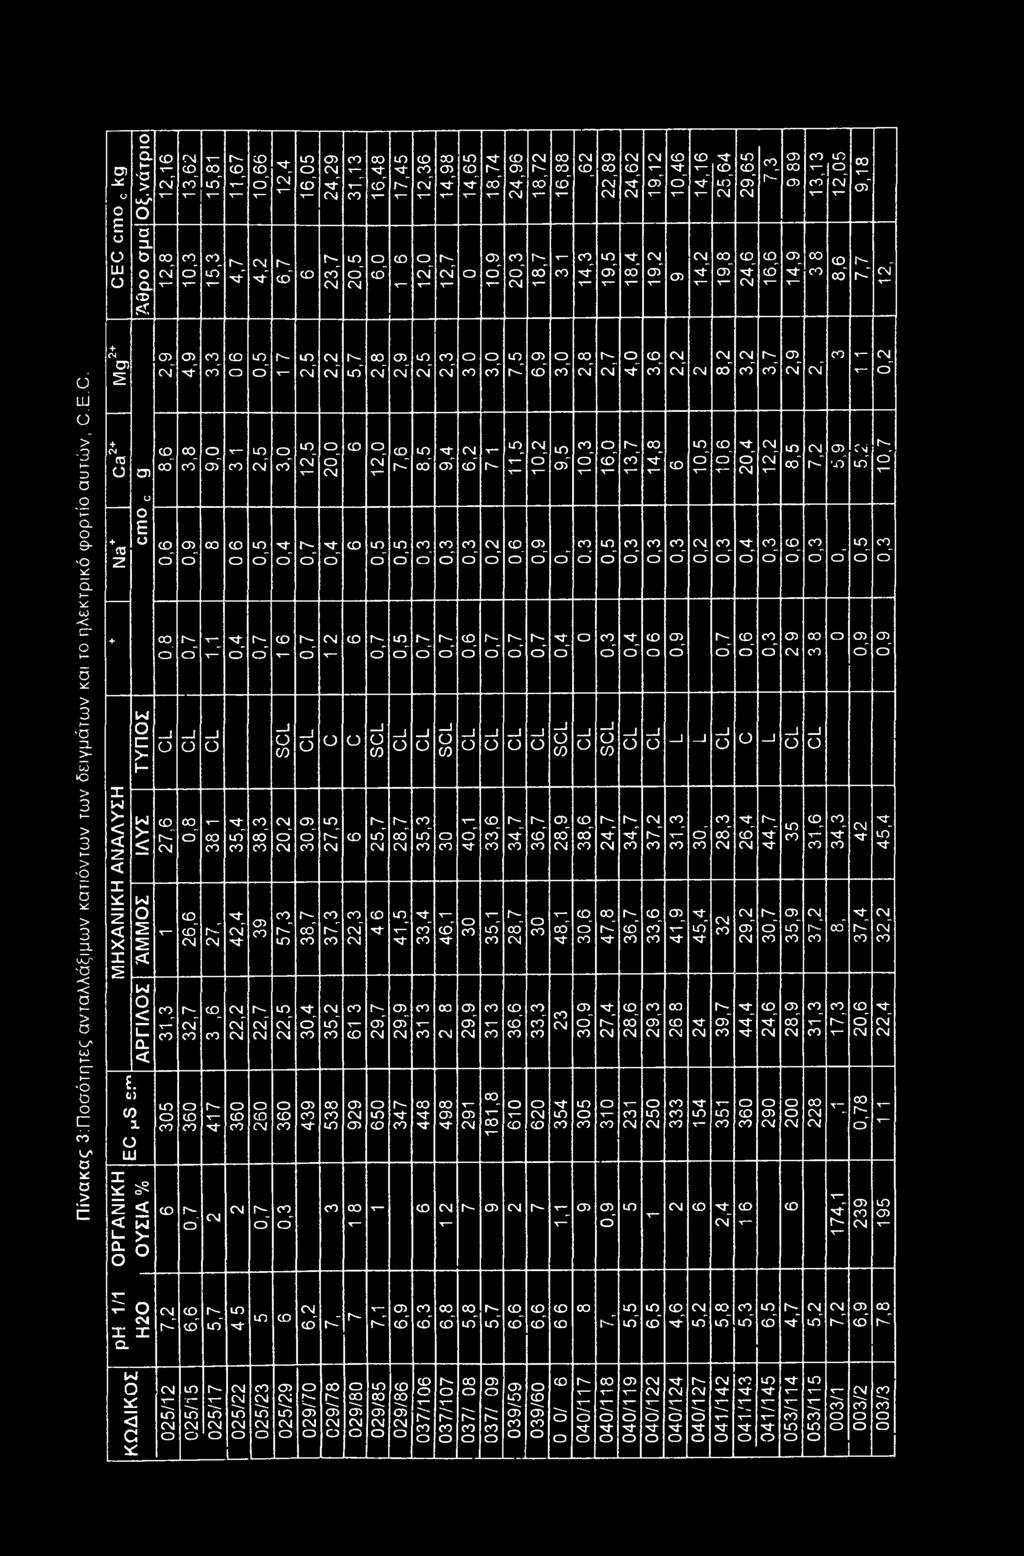 7,7 cm Πίνακας 3:Πσότητες ανταλλάξιμων κατιόντων των δειγμάτων και τ ηλεκτρικό φρτί αυτών, C.E.C. + σ> Έ + 04 CS Ο Ο) + «3 ζ 2,9 4,9 3,3 8,6 3,8 9,0 Ε υ θ + ΤΥΠΟΣ ΜΗΧΑΝΙΚΗ ΑΝΑΛΥΣΗ ΆΜΜΟΣ ΙΛΥΣ 27,6 '!